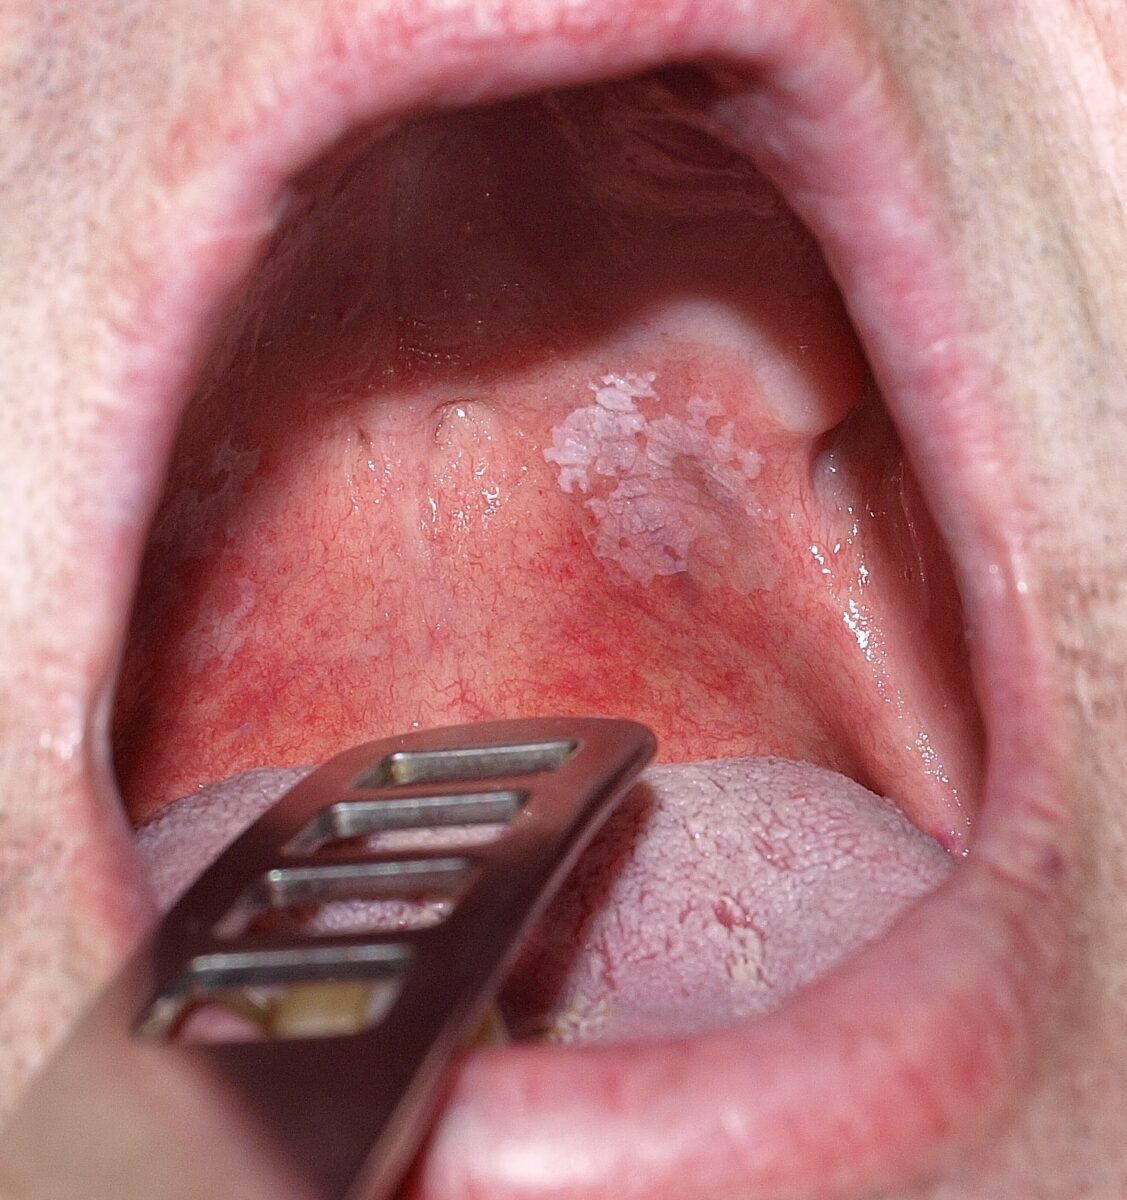 Homogeneous oral leukoplakia